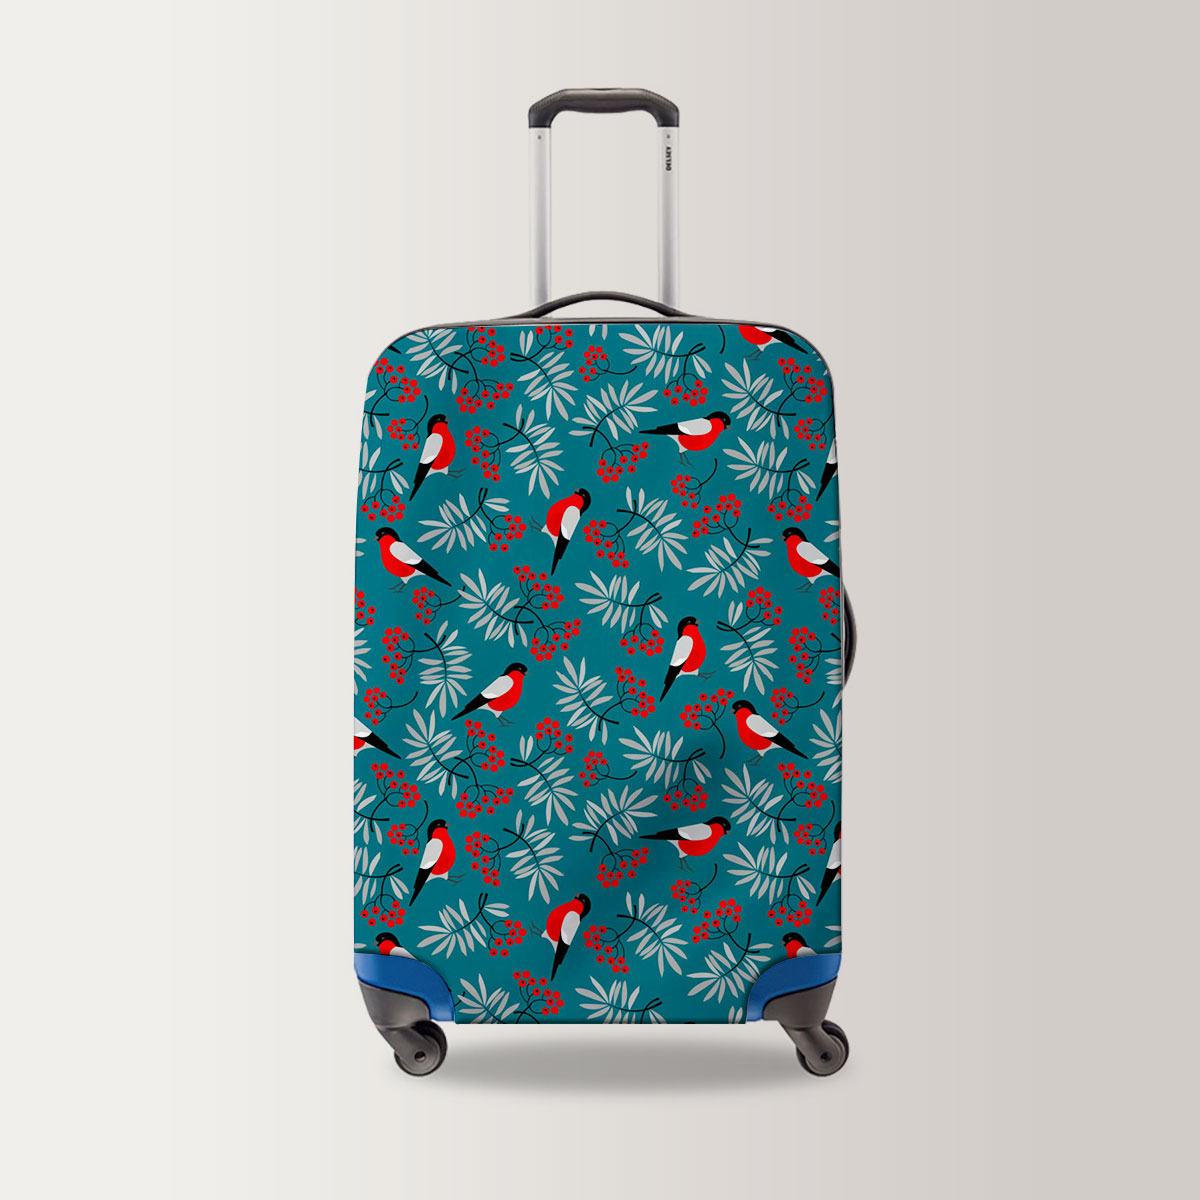 Mountain Finch Luggage Bag